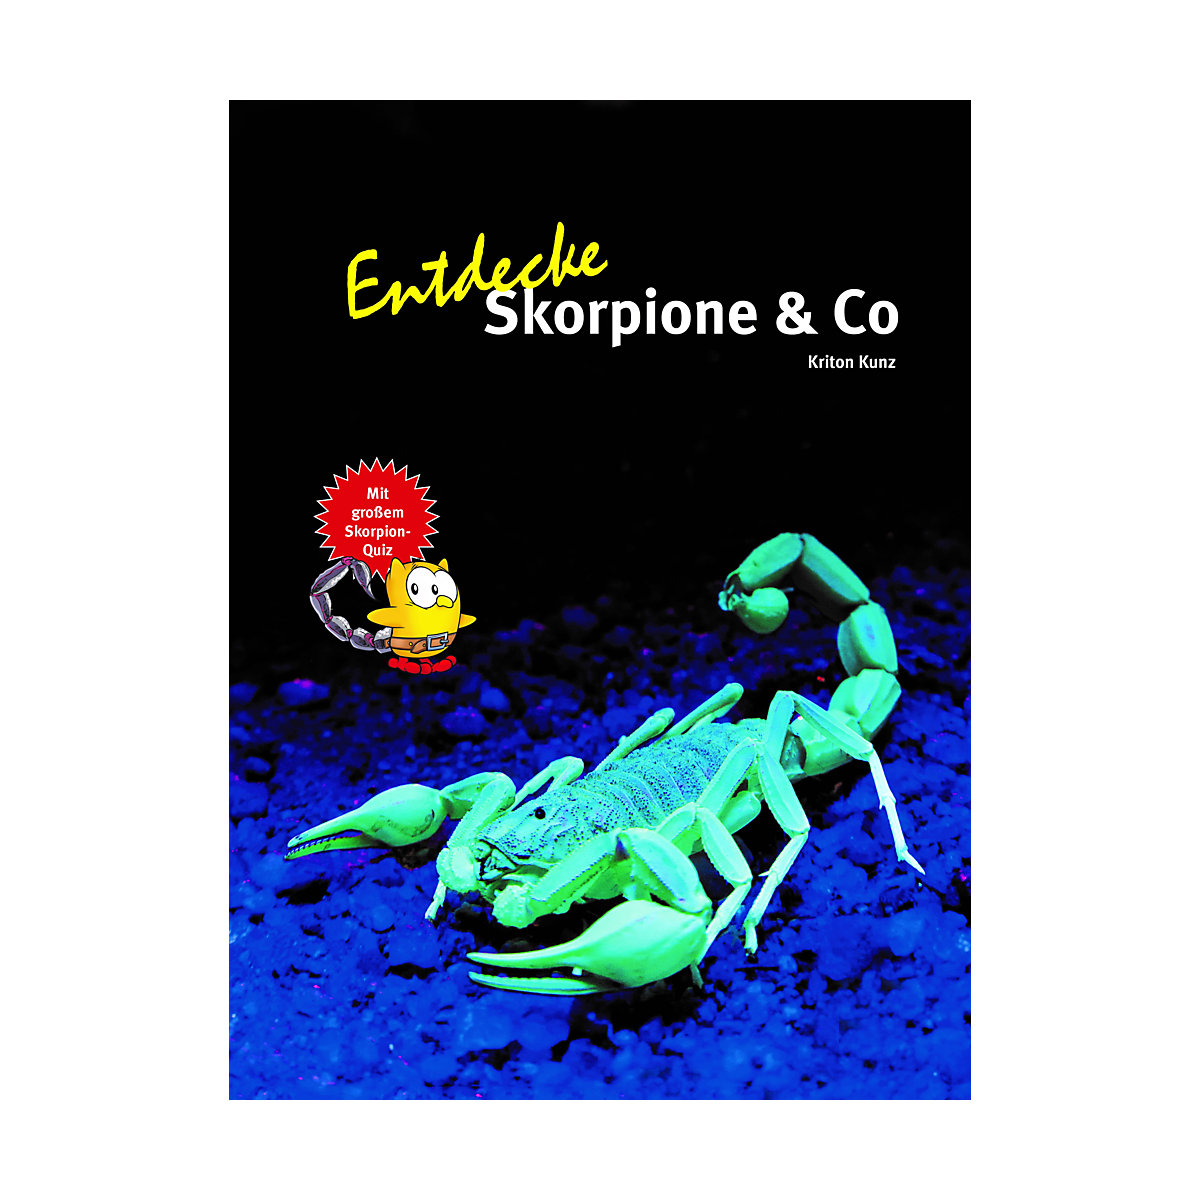 Entdecke Skorpione & Co